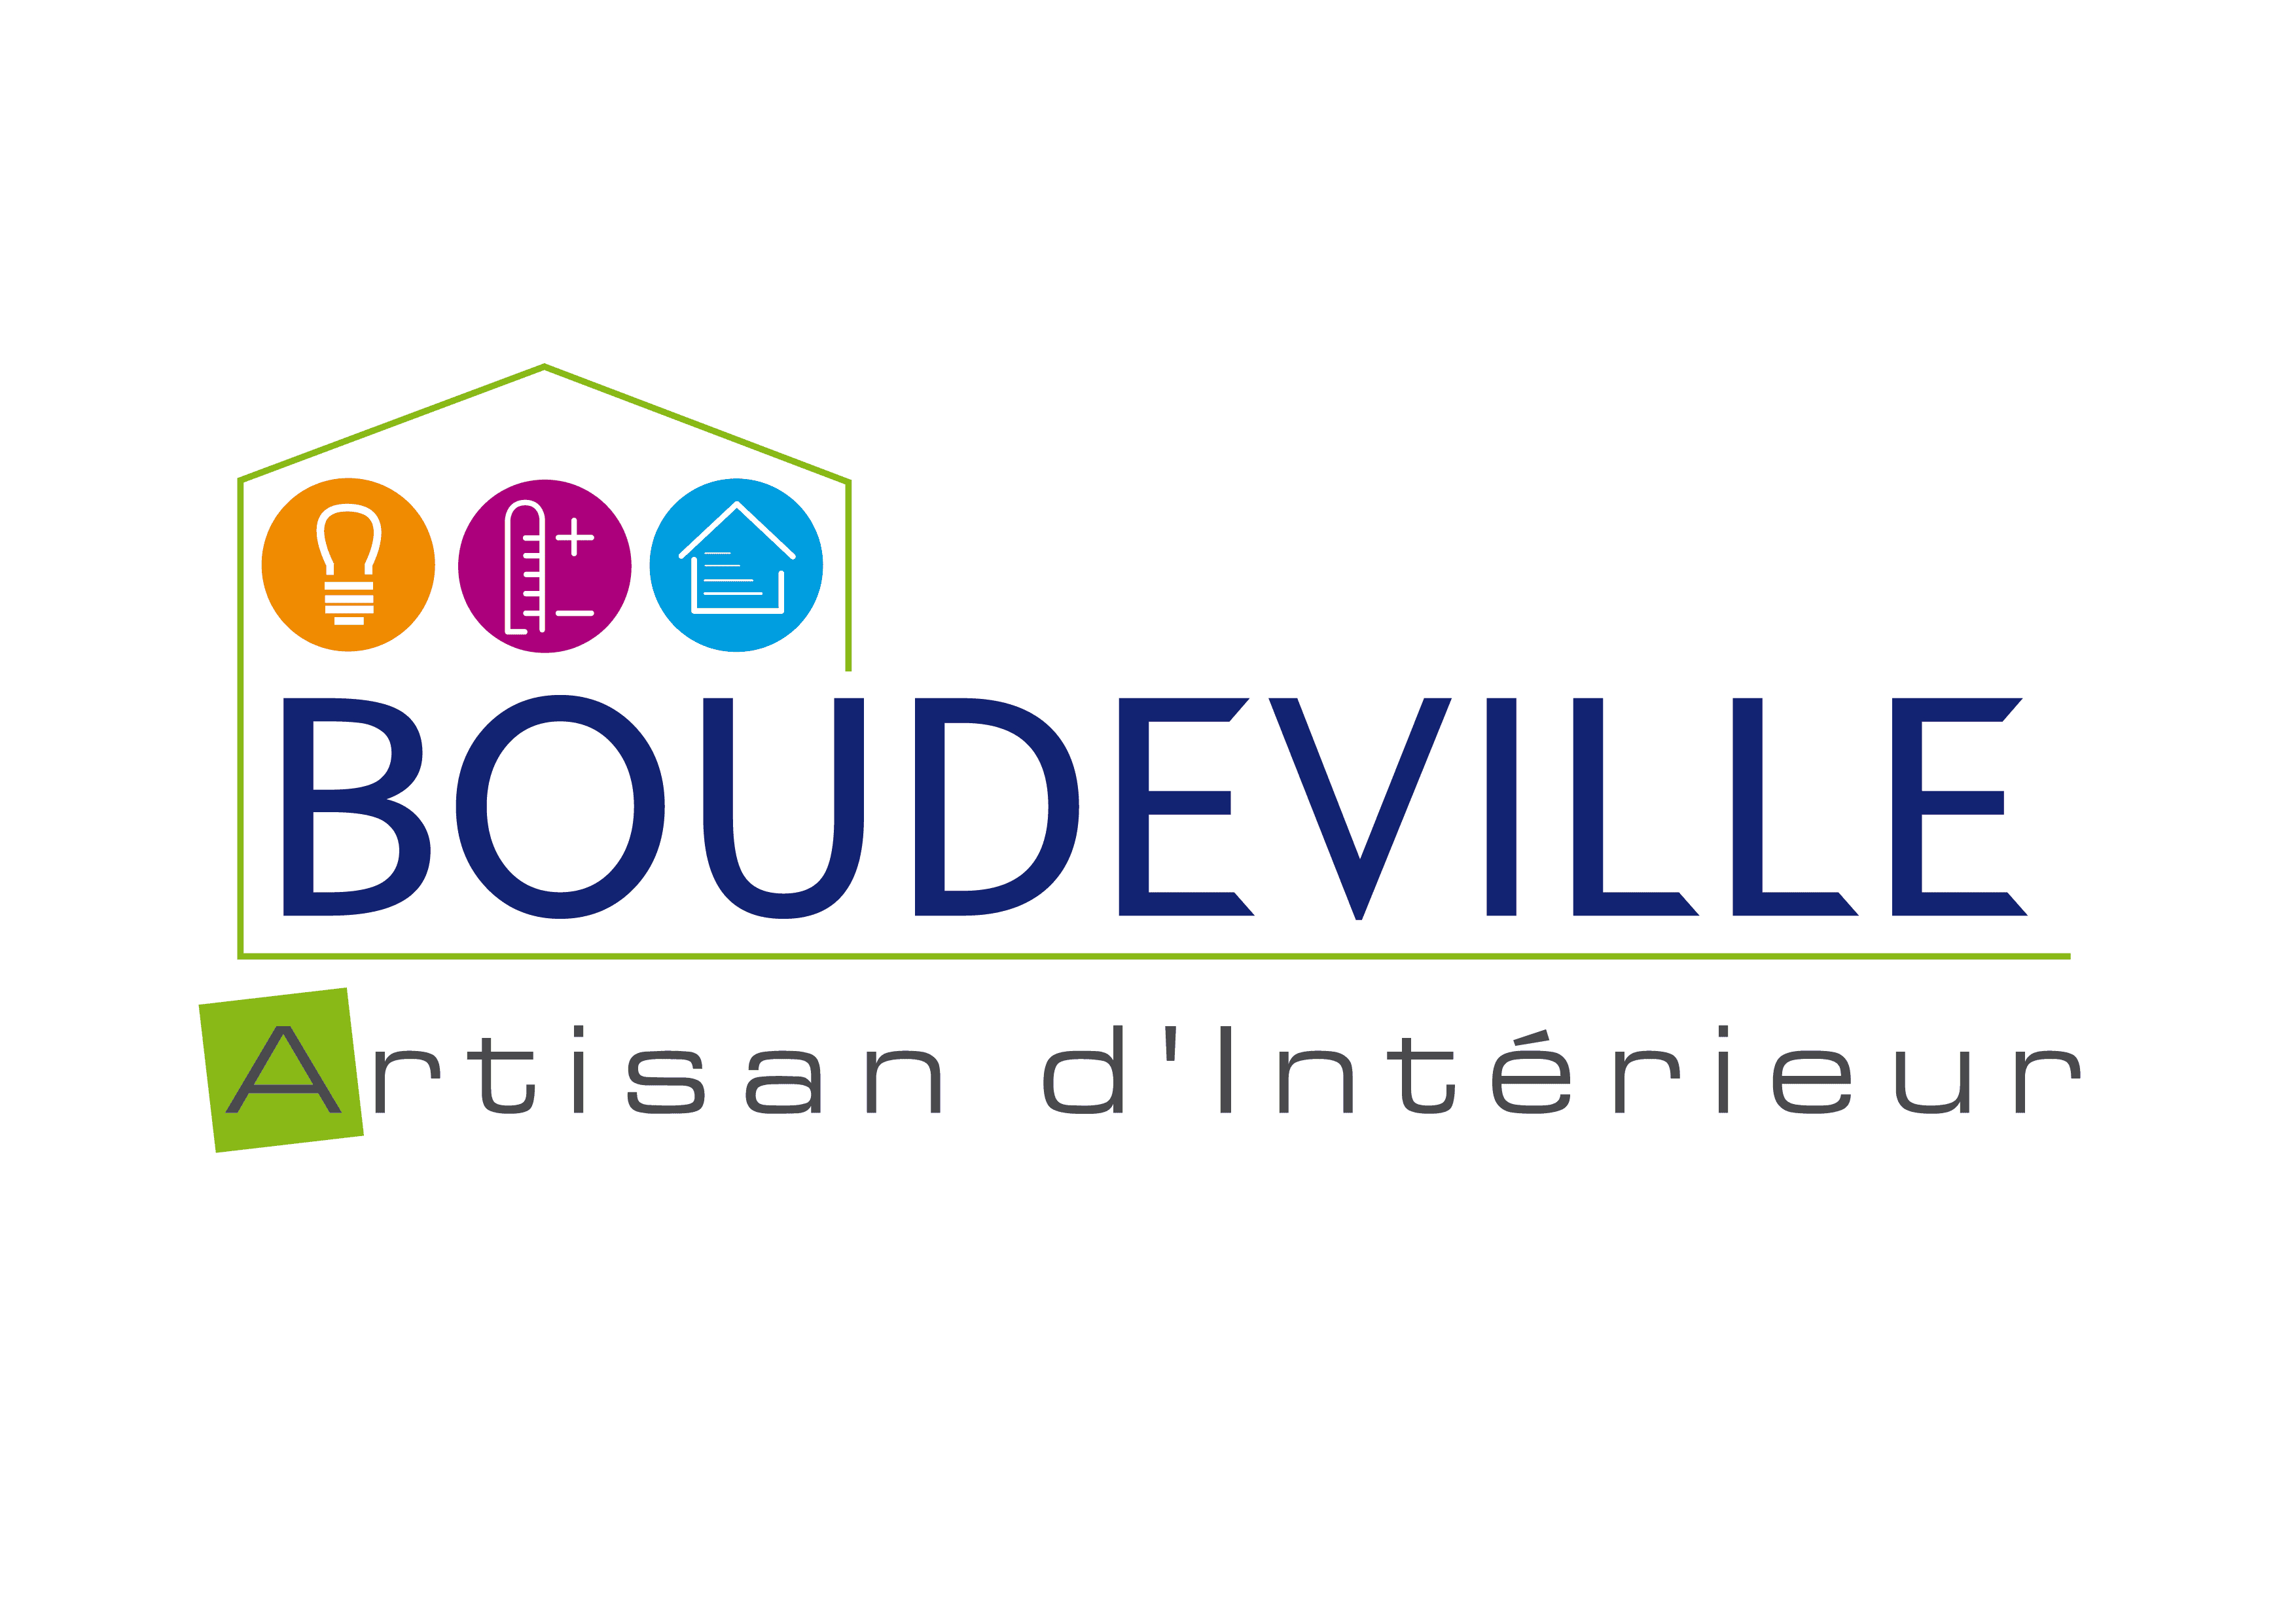 Boudeville artisan